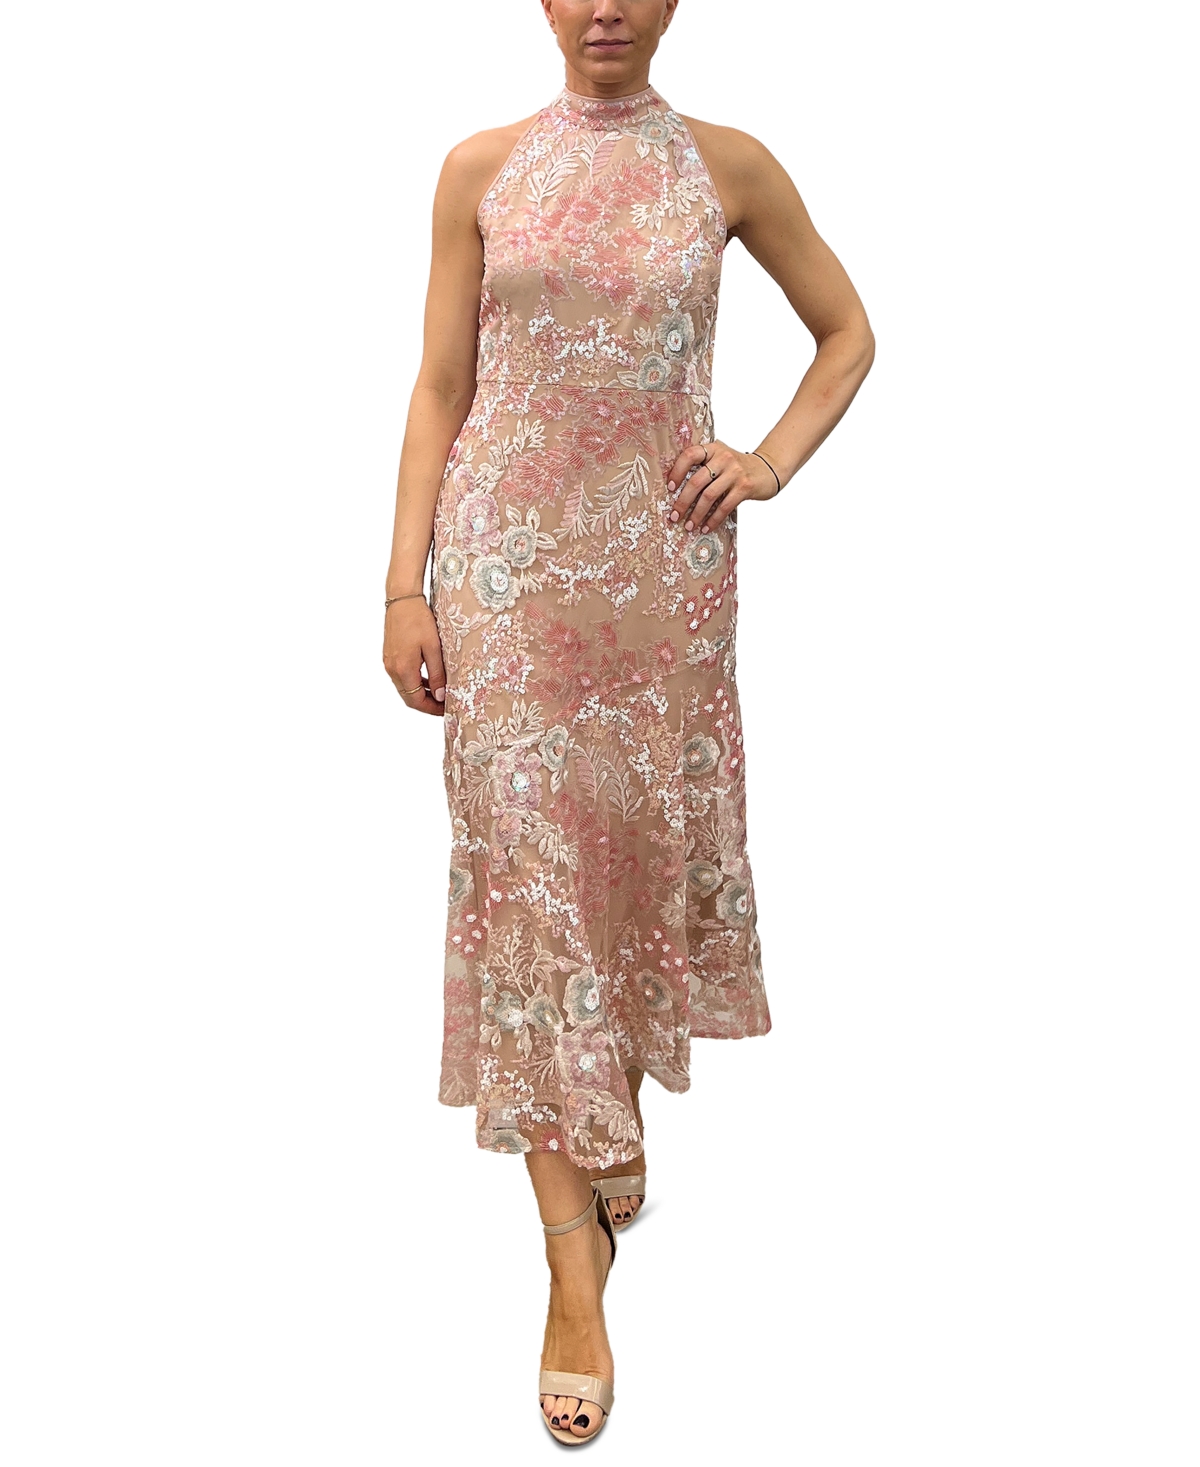 Women's Floral Lace Sequin Sleeveless Dress - Blush Mult